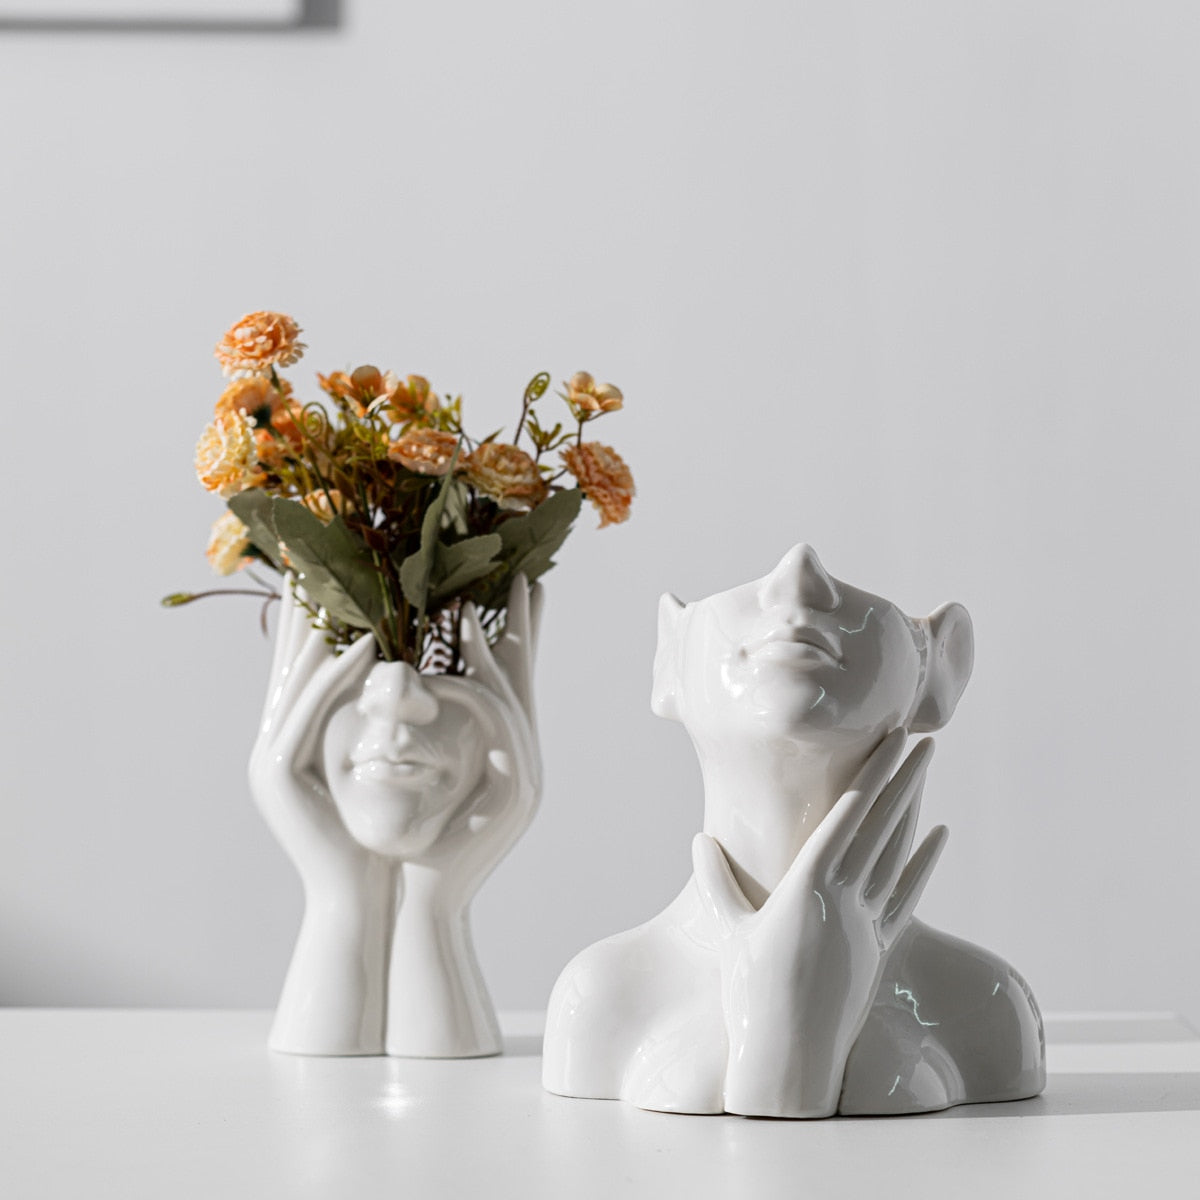 Abstract Human Face Ceramic Vase